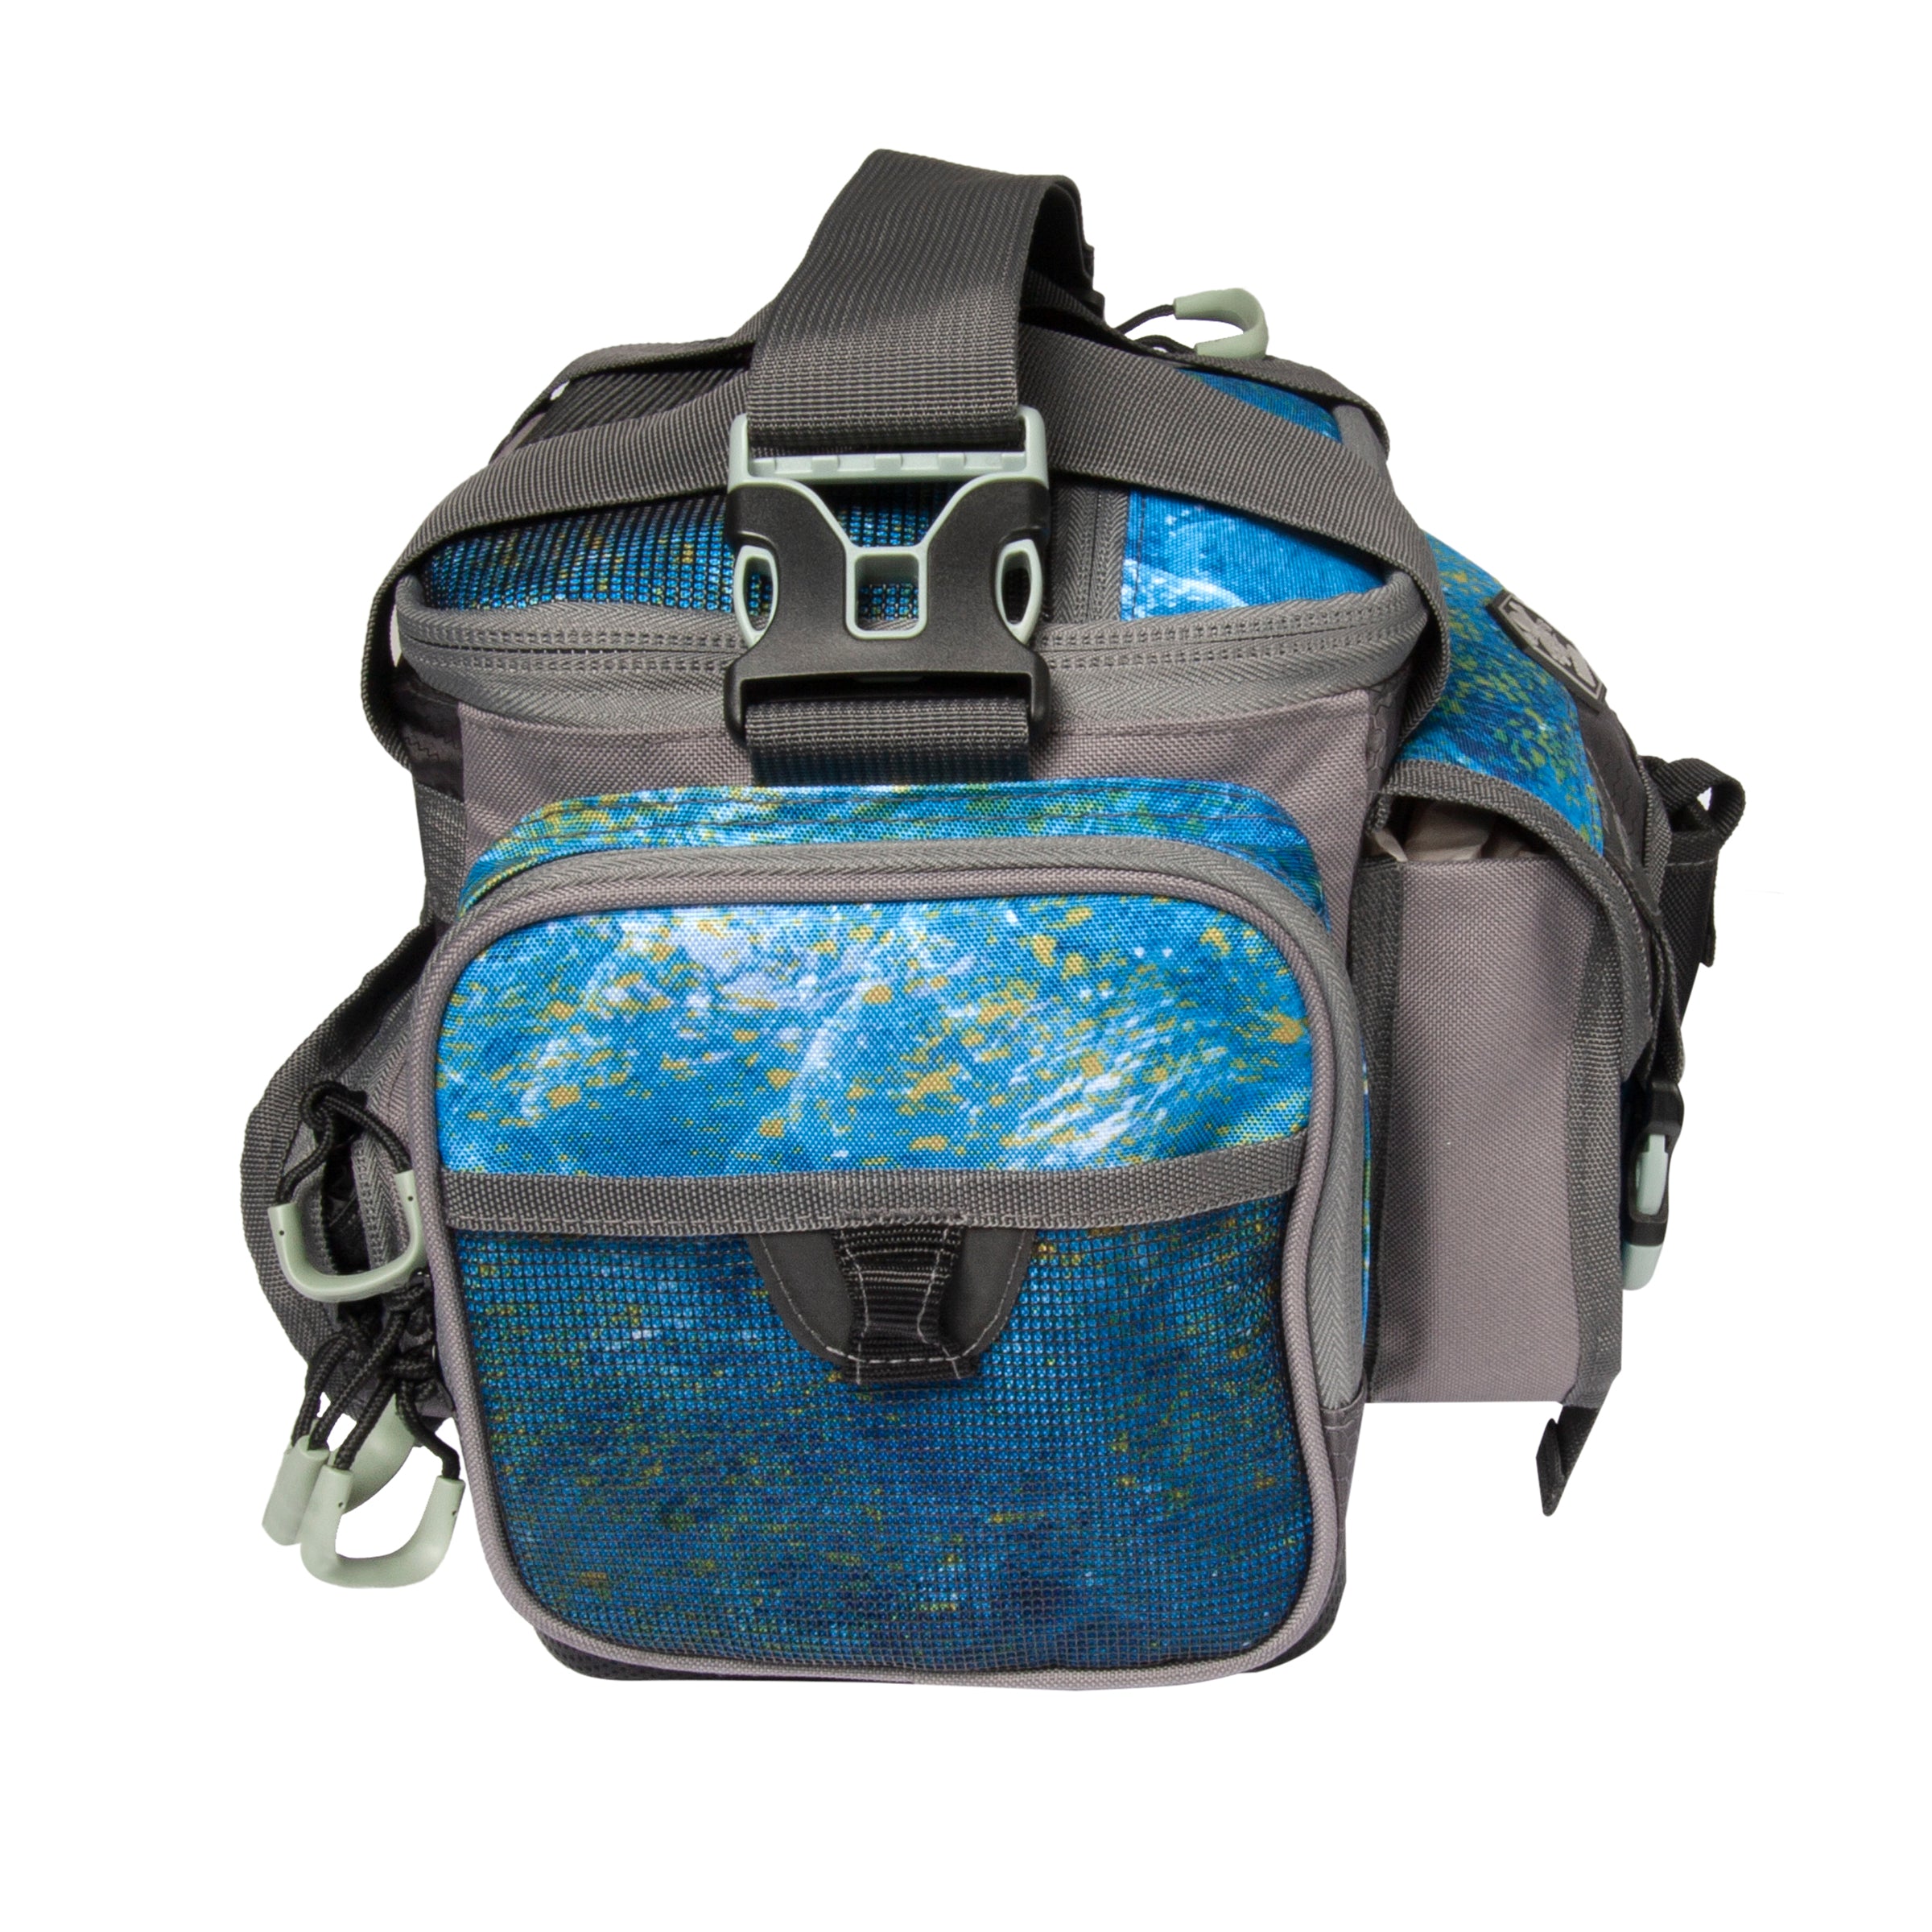 Tackle Bag | Squall 3600 Tackle Bag | Calcutta Outdoors®